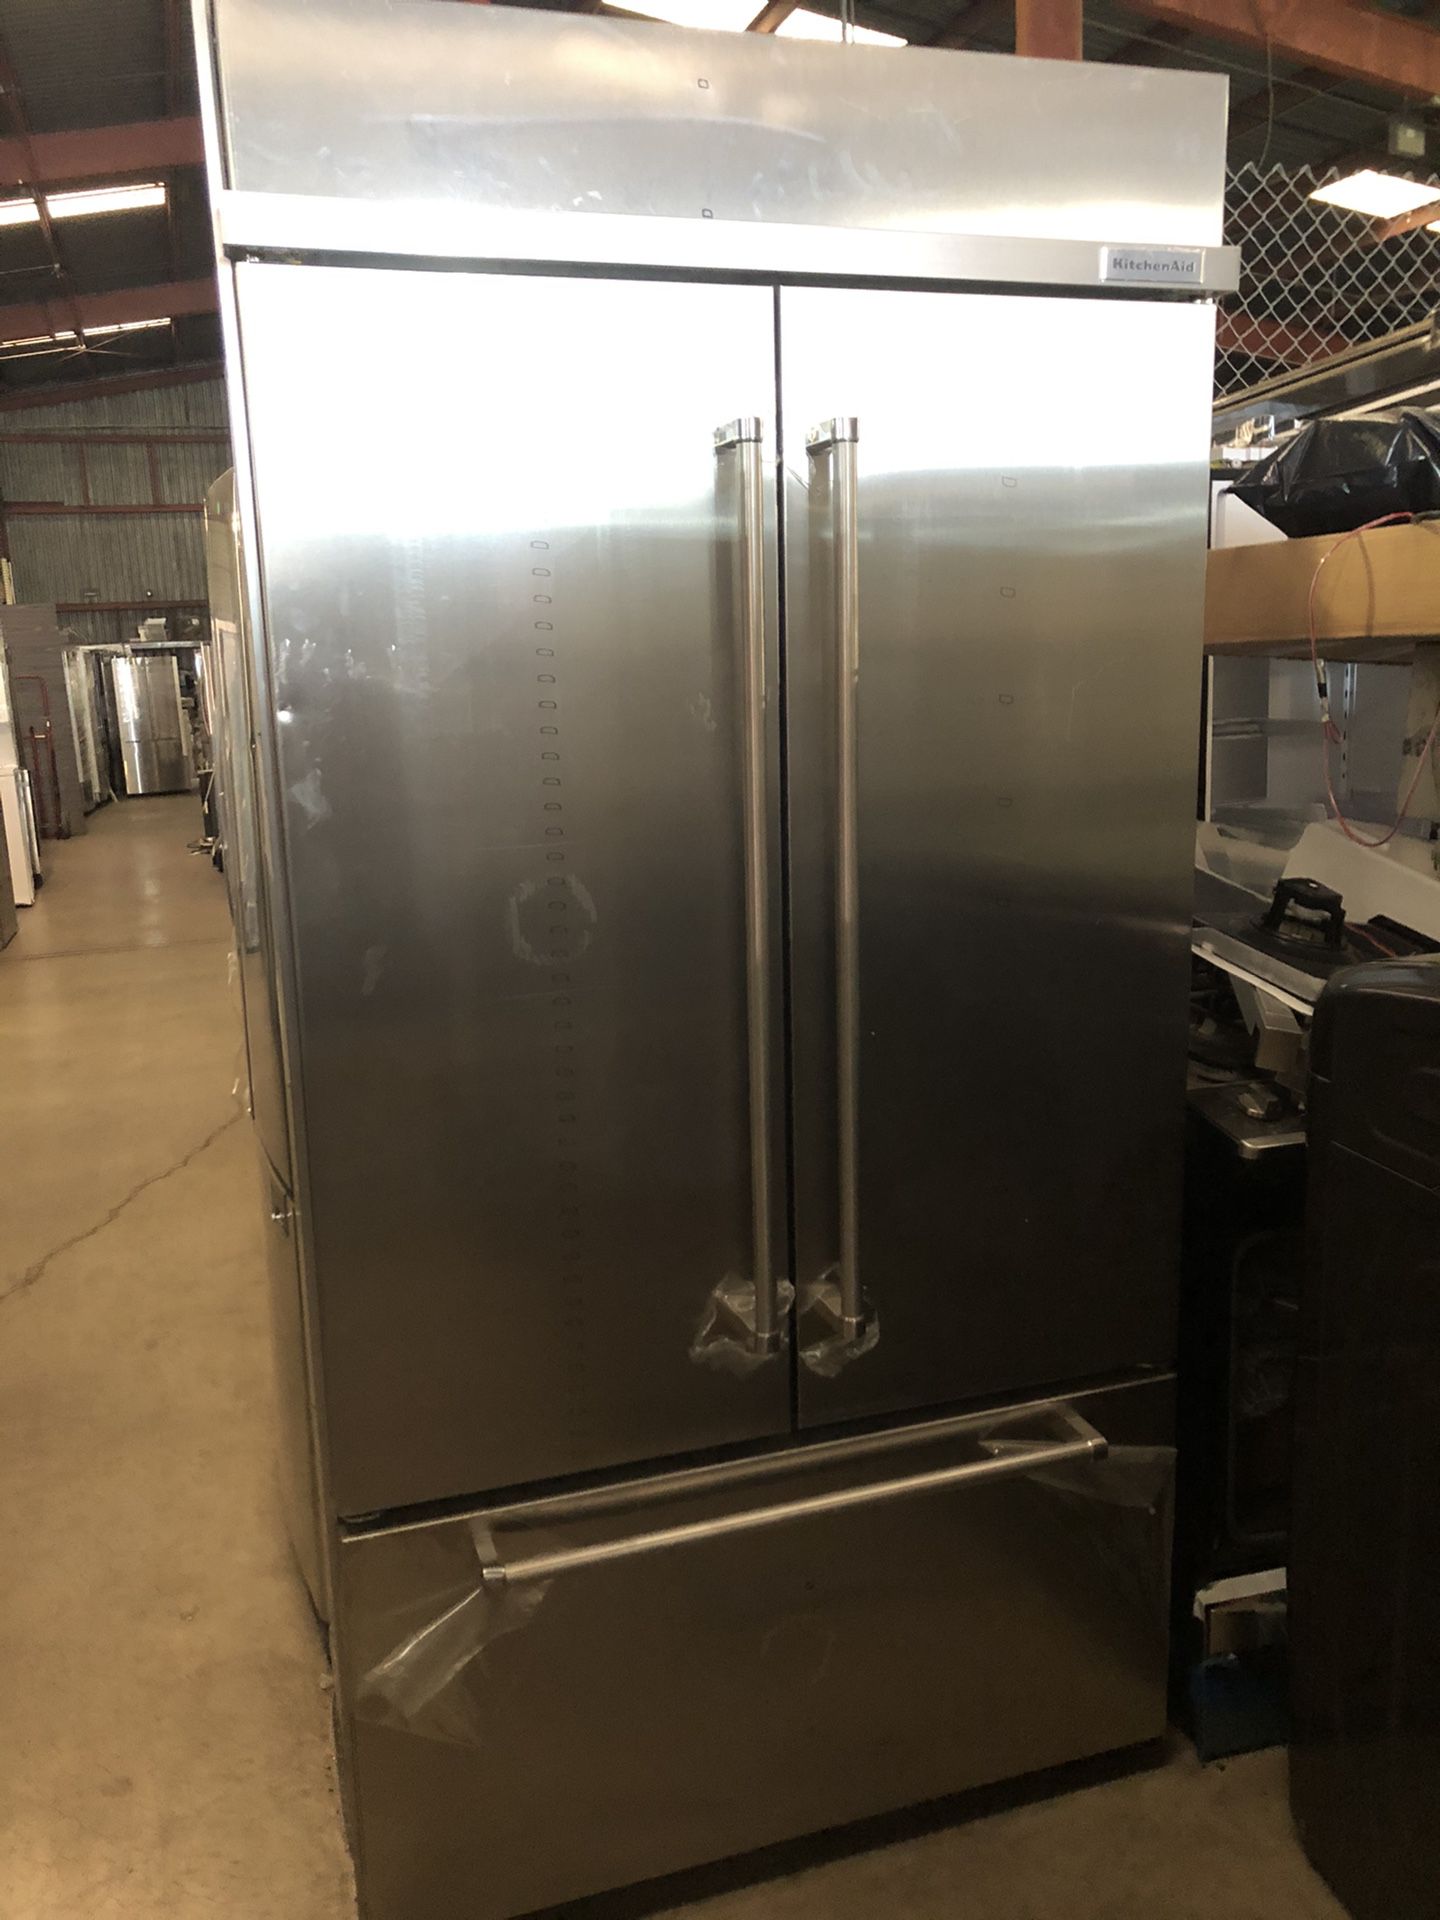 New! Kitchen-Aid 42’ Built-In Refrigerator